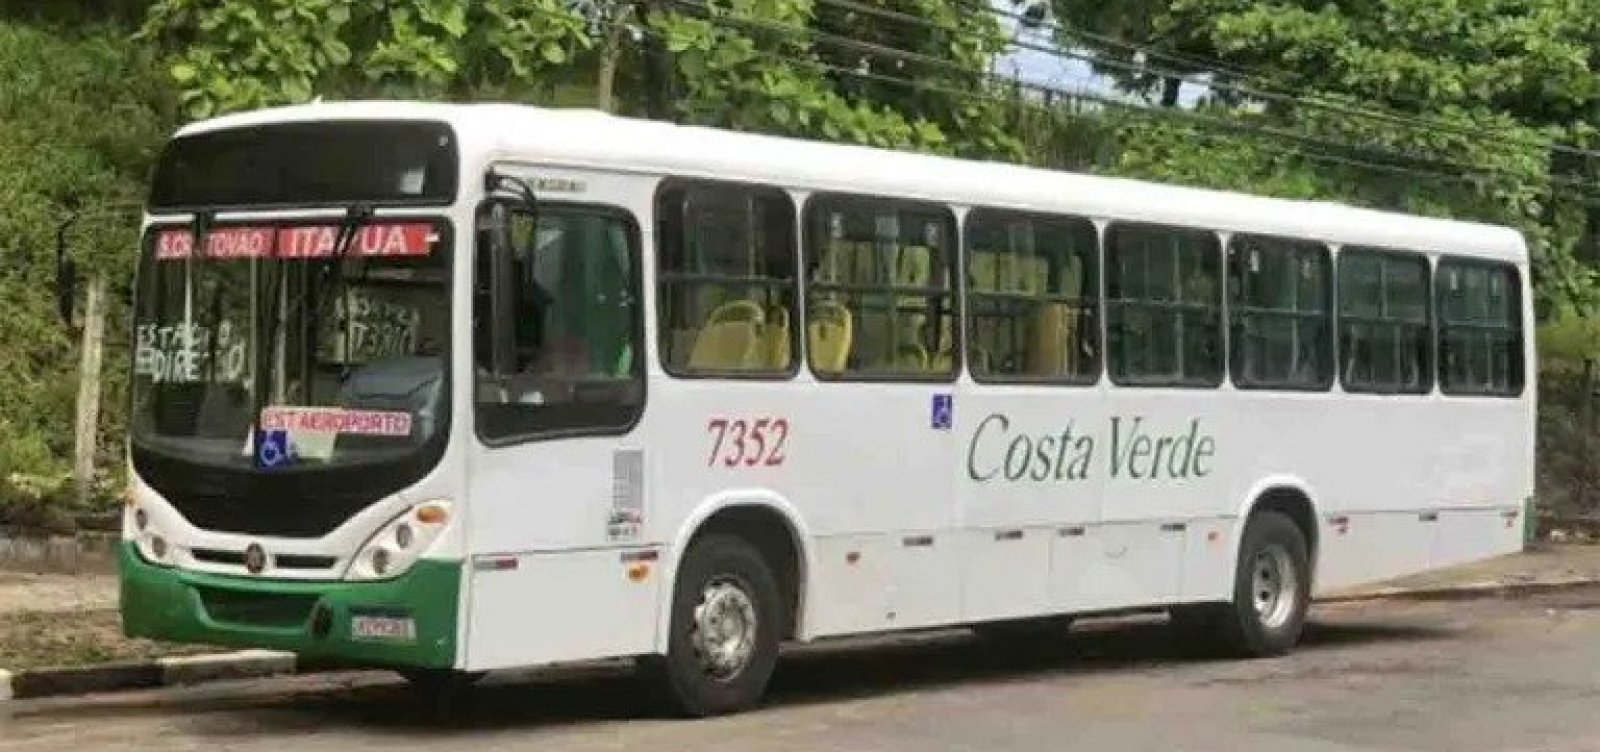 Empresa de ônibus metropolitano anuncia encerramento das atividades 